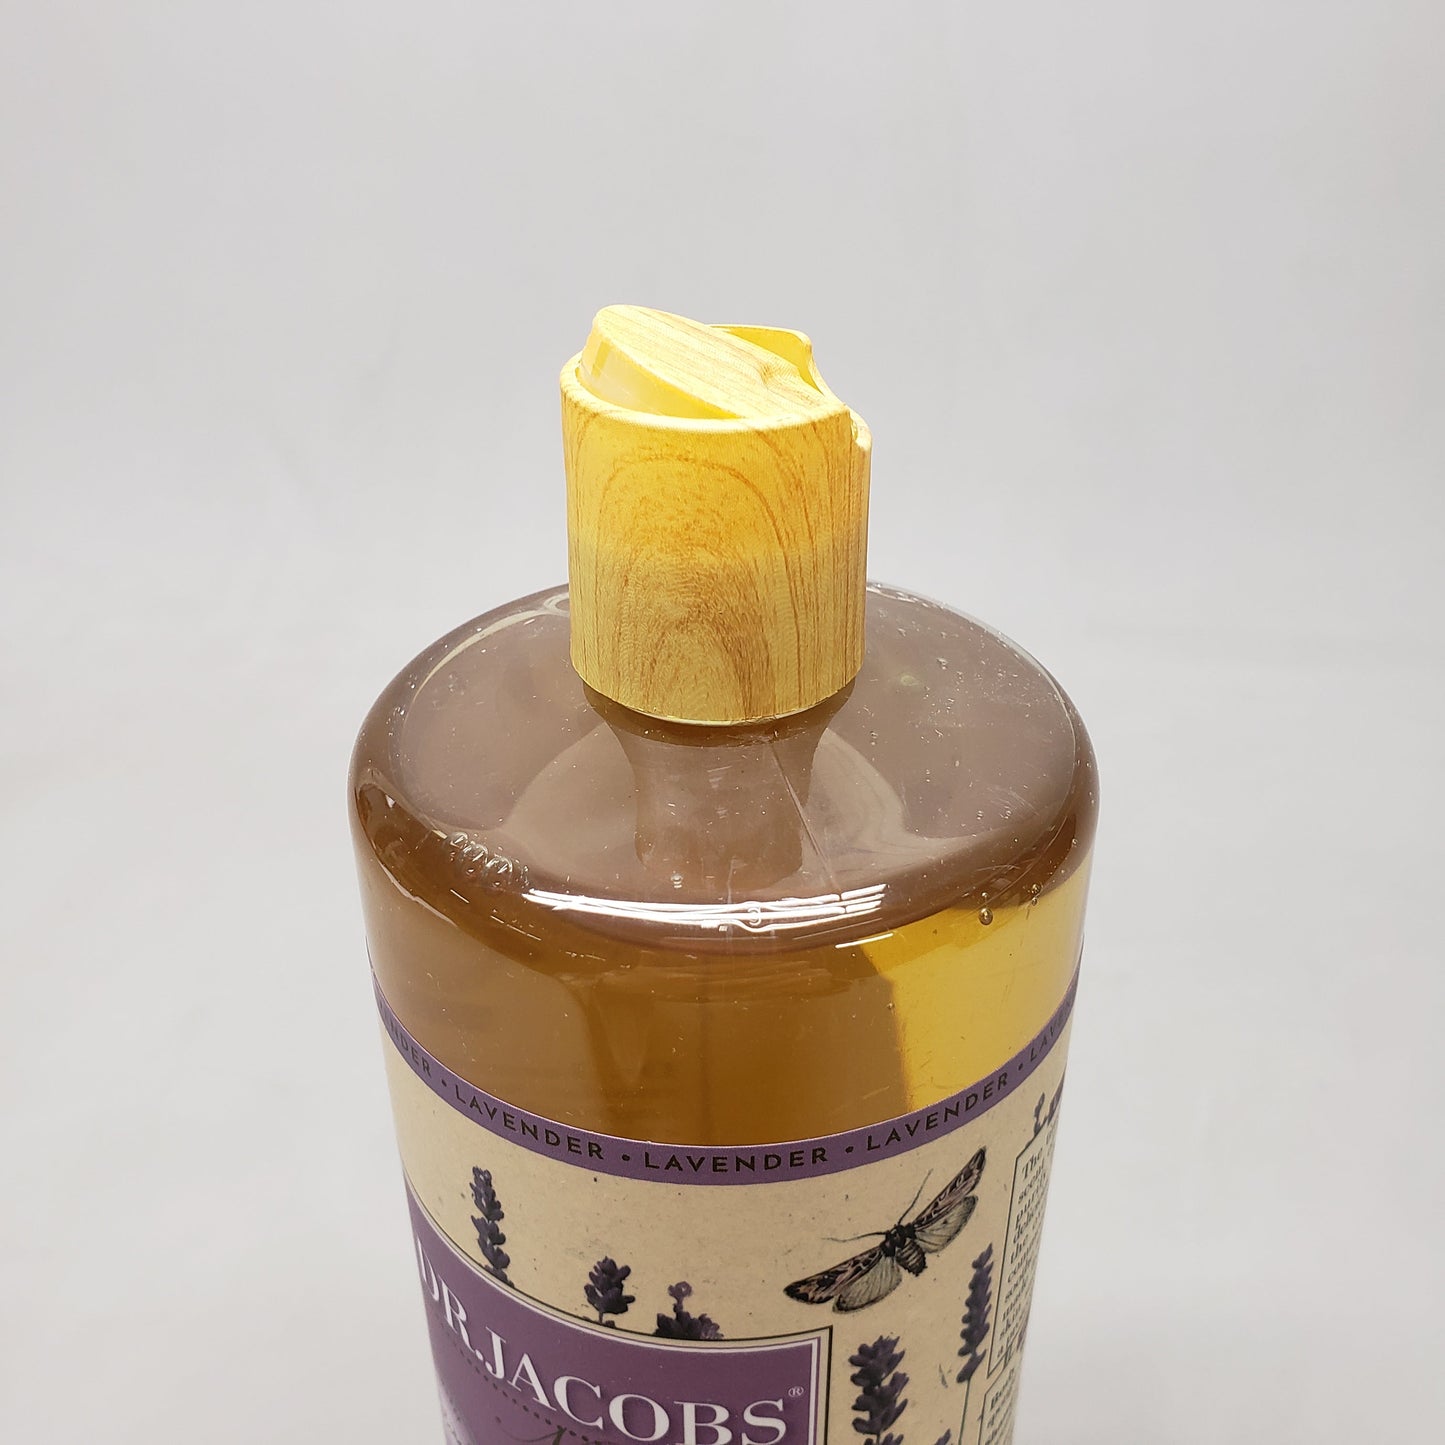 DR. JACOBS NATURALS Lavender Castile Liquid Soap Lot of 4 - 32 oz Hypoallergenic (New)